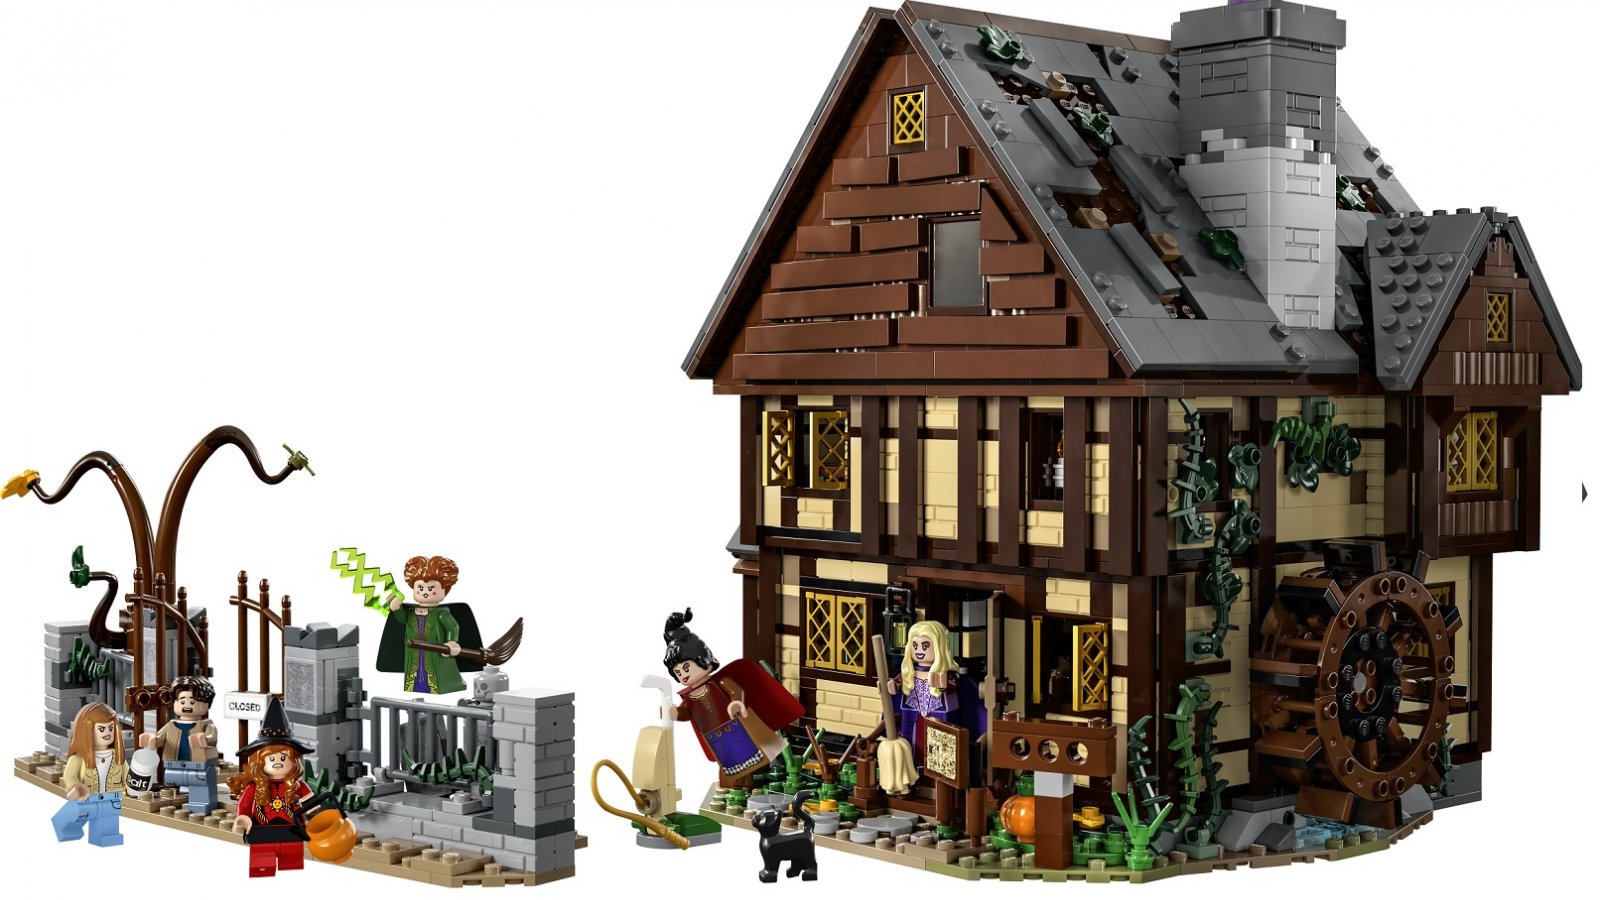 Hocus Pocus: arriva il set Lego ispirato al cult con Bette Midler